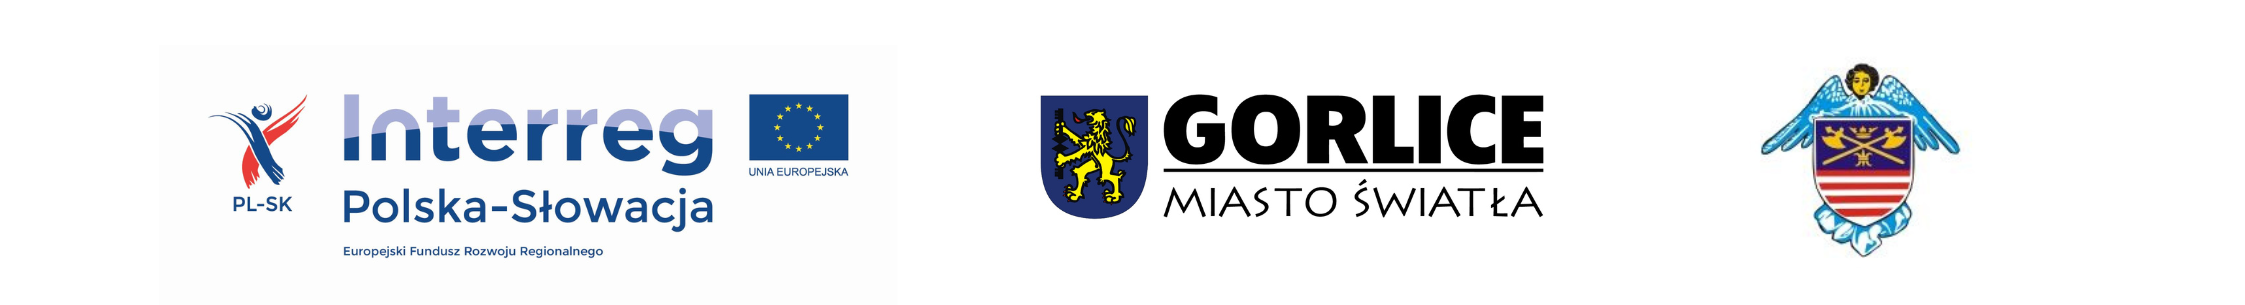 Logotypy programu Interreg, miasto Gorlice i Bardejowa.